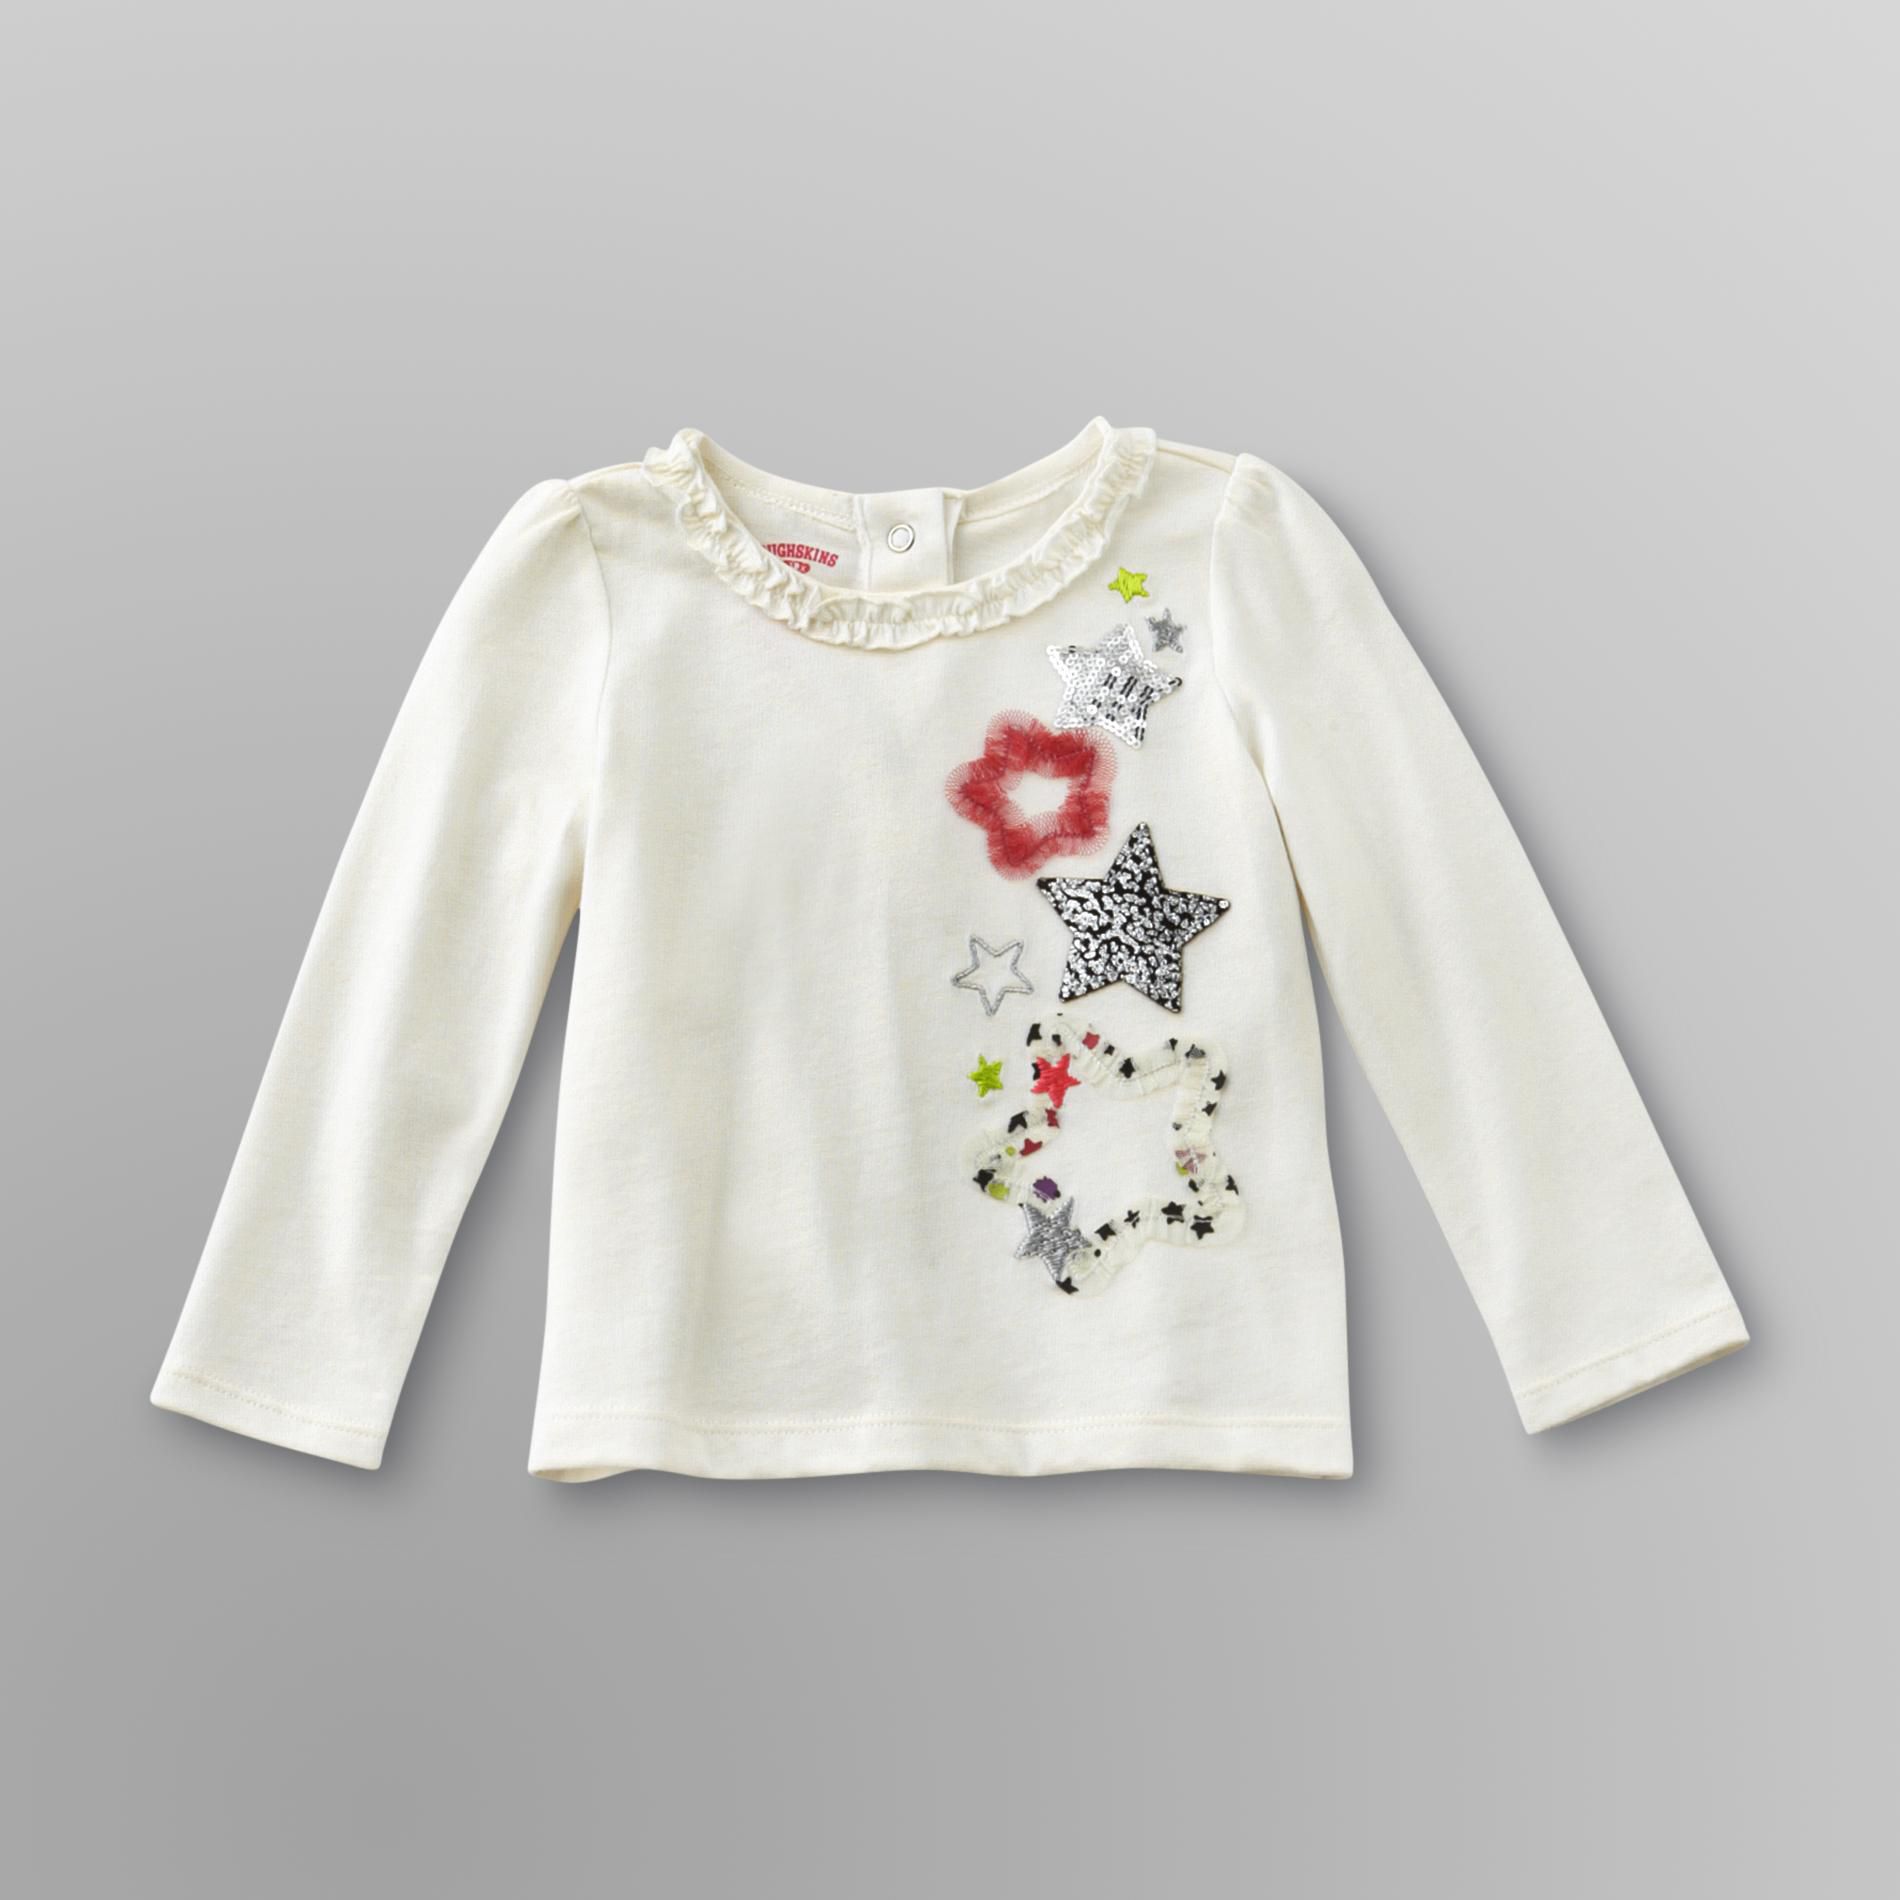 Toughskins Infant & Toddler Girl's Sparkle Star Shirt